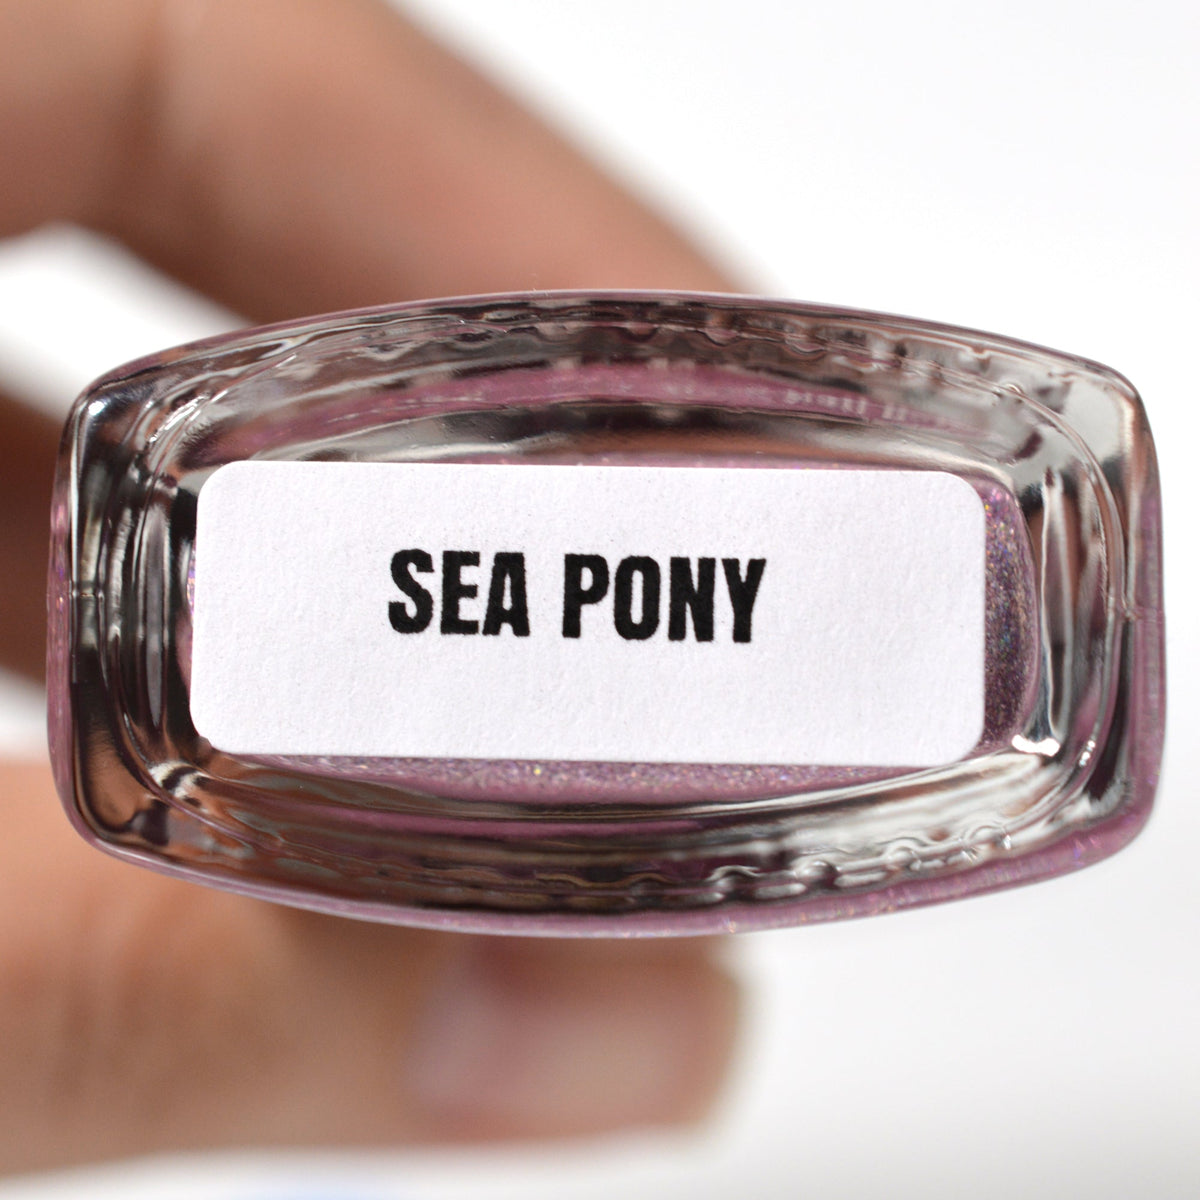 Sea Pony - Nail Polish - BLUSH